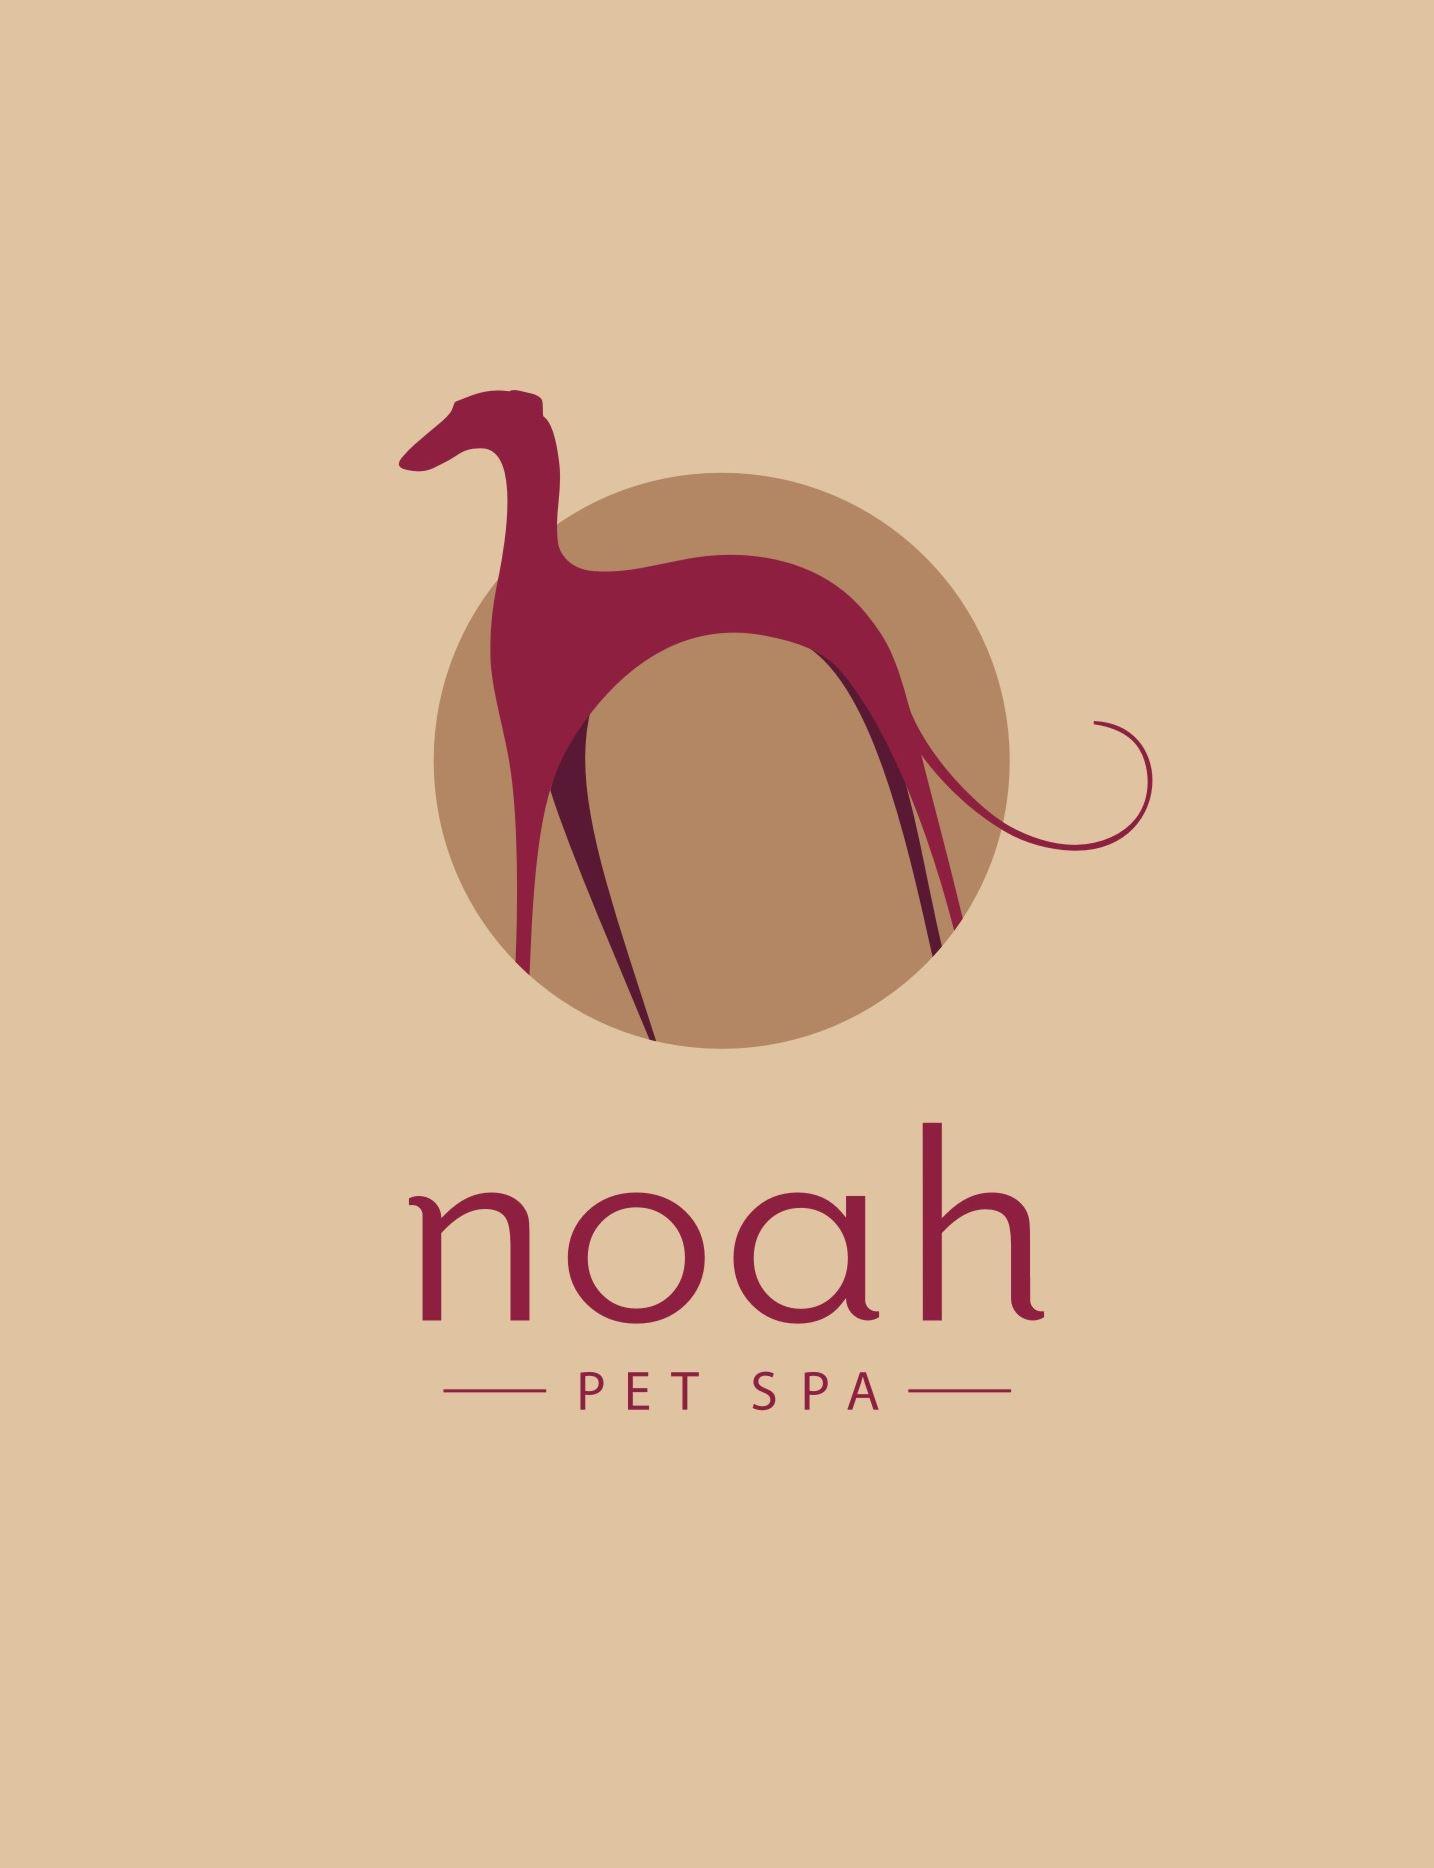 Noah Pet Spa logo